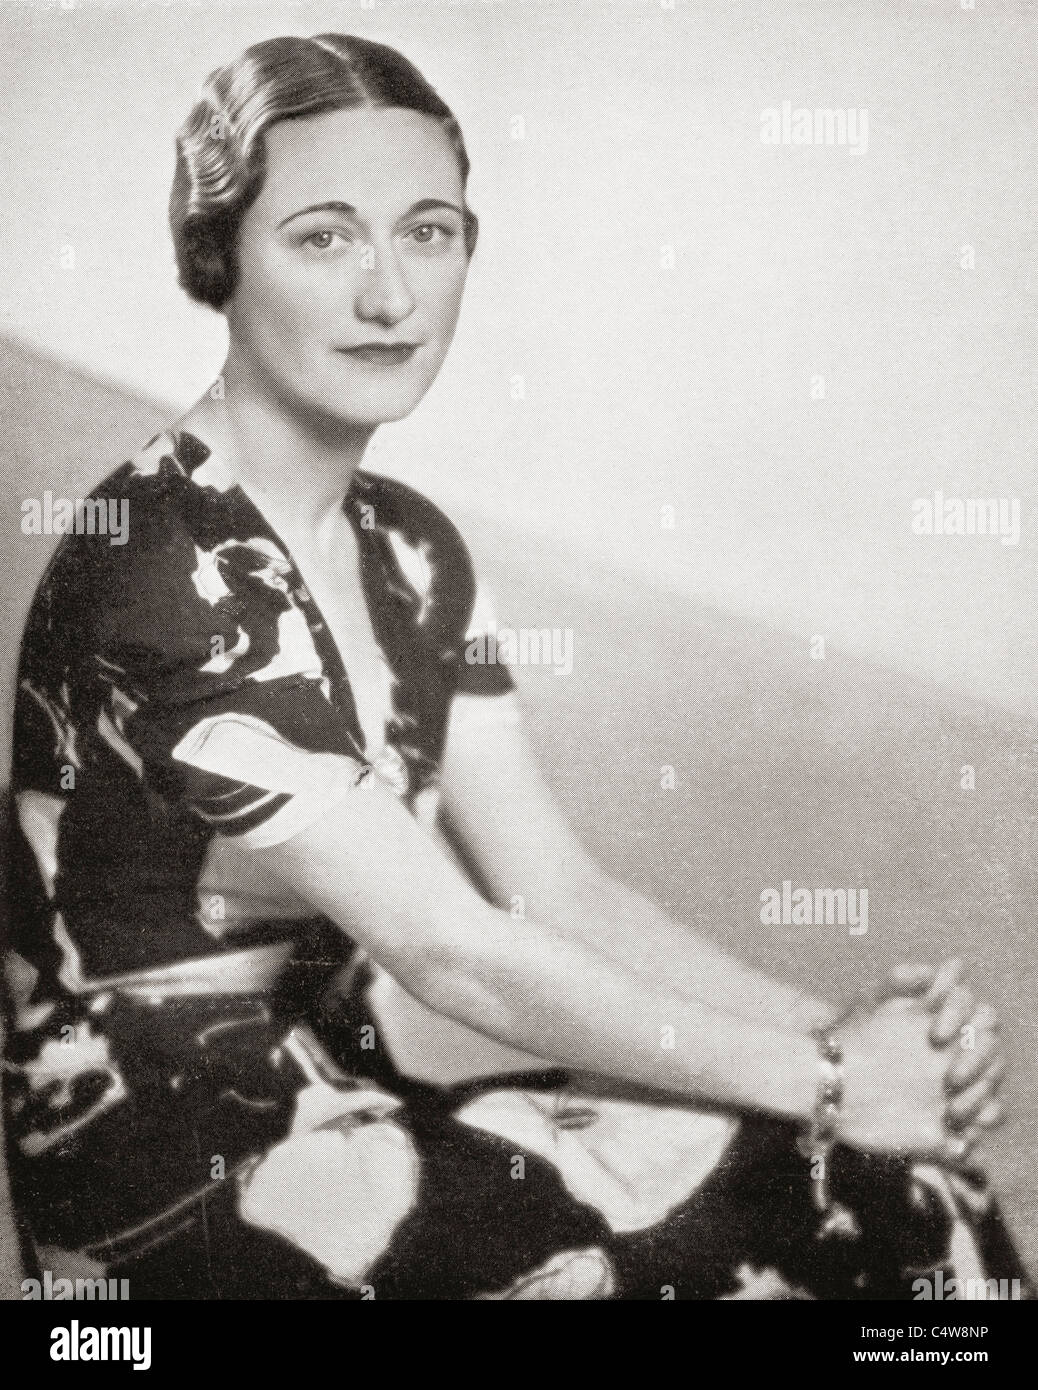 Wallis Simpson, precedentemente Wallis Spencer, più tardi la Duchessa di Windsor, 1896 - 1986. Foto Stock